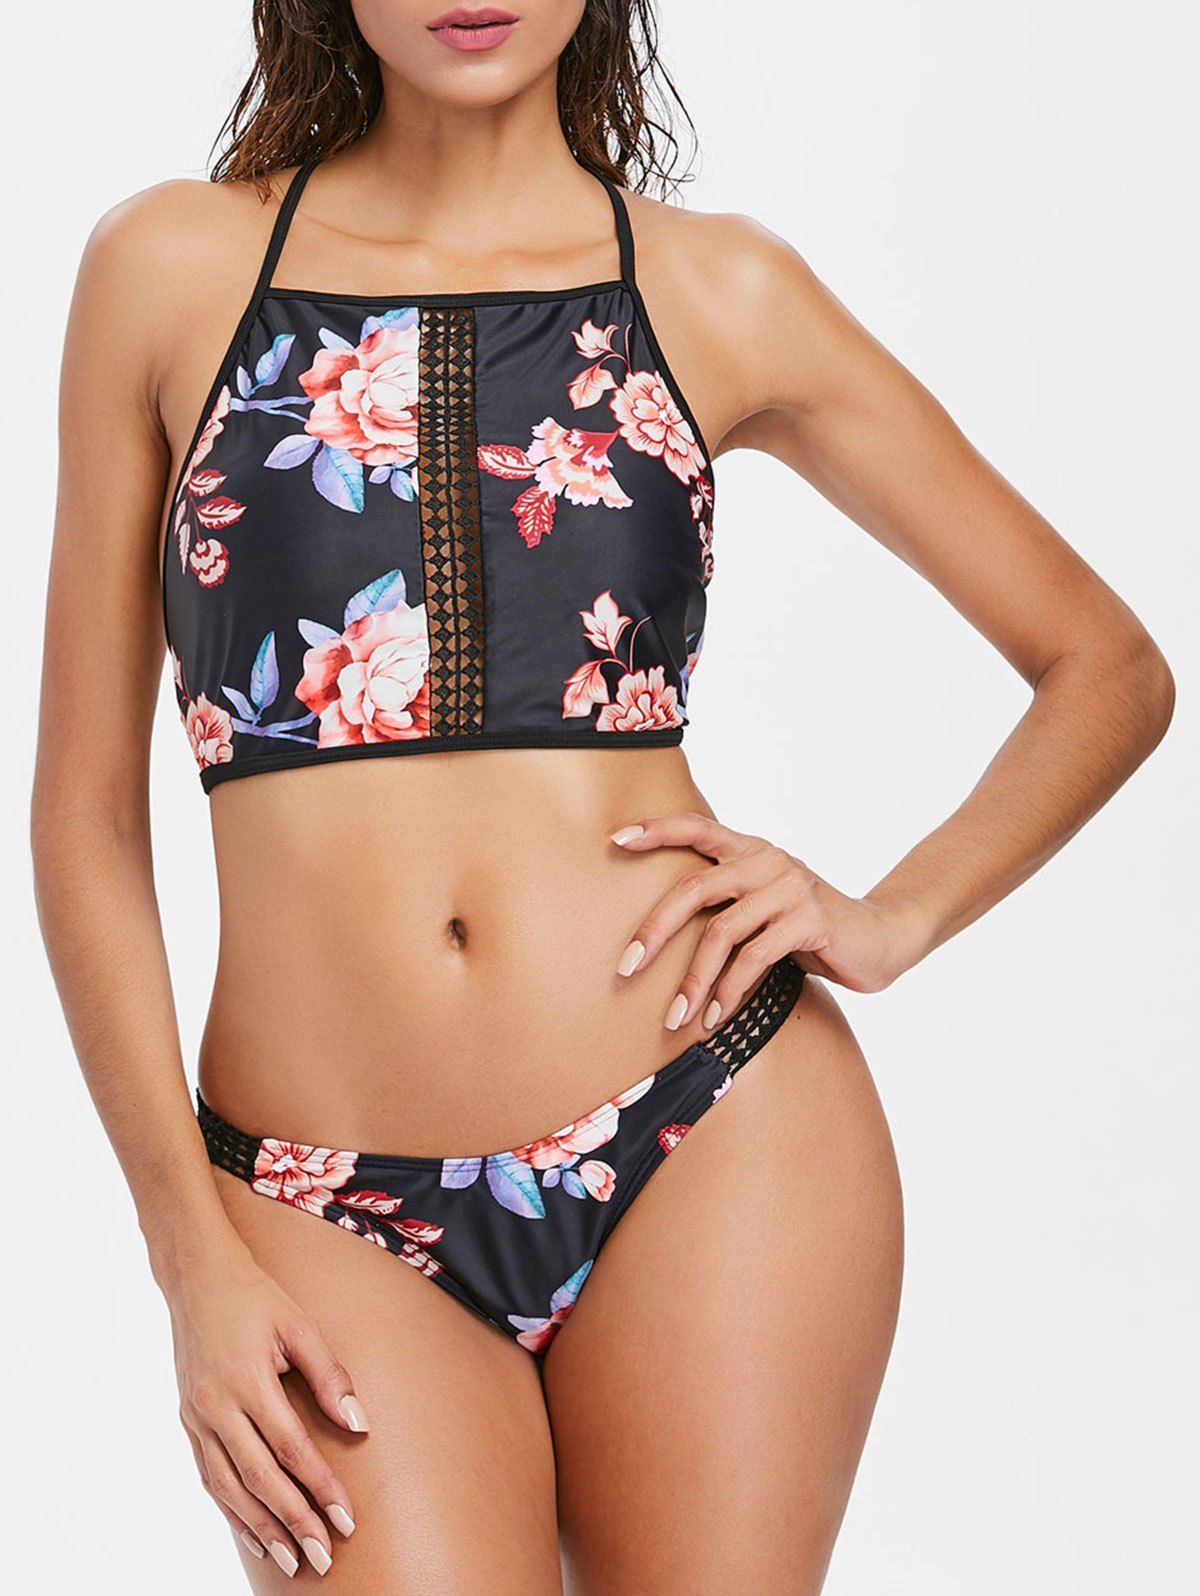 Floral Print Lace Up Back Bikini - BLACK XL